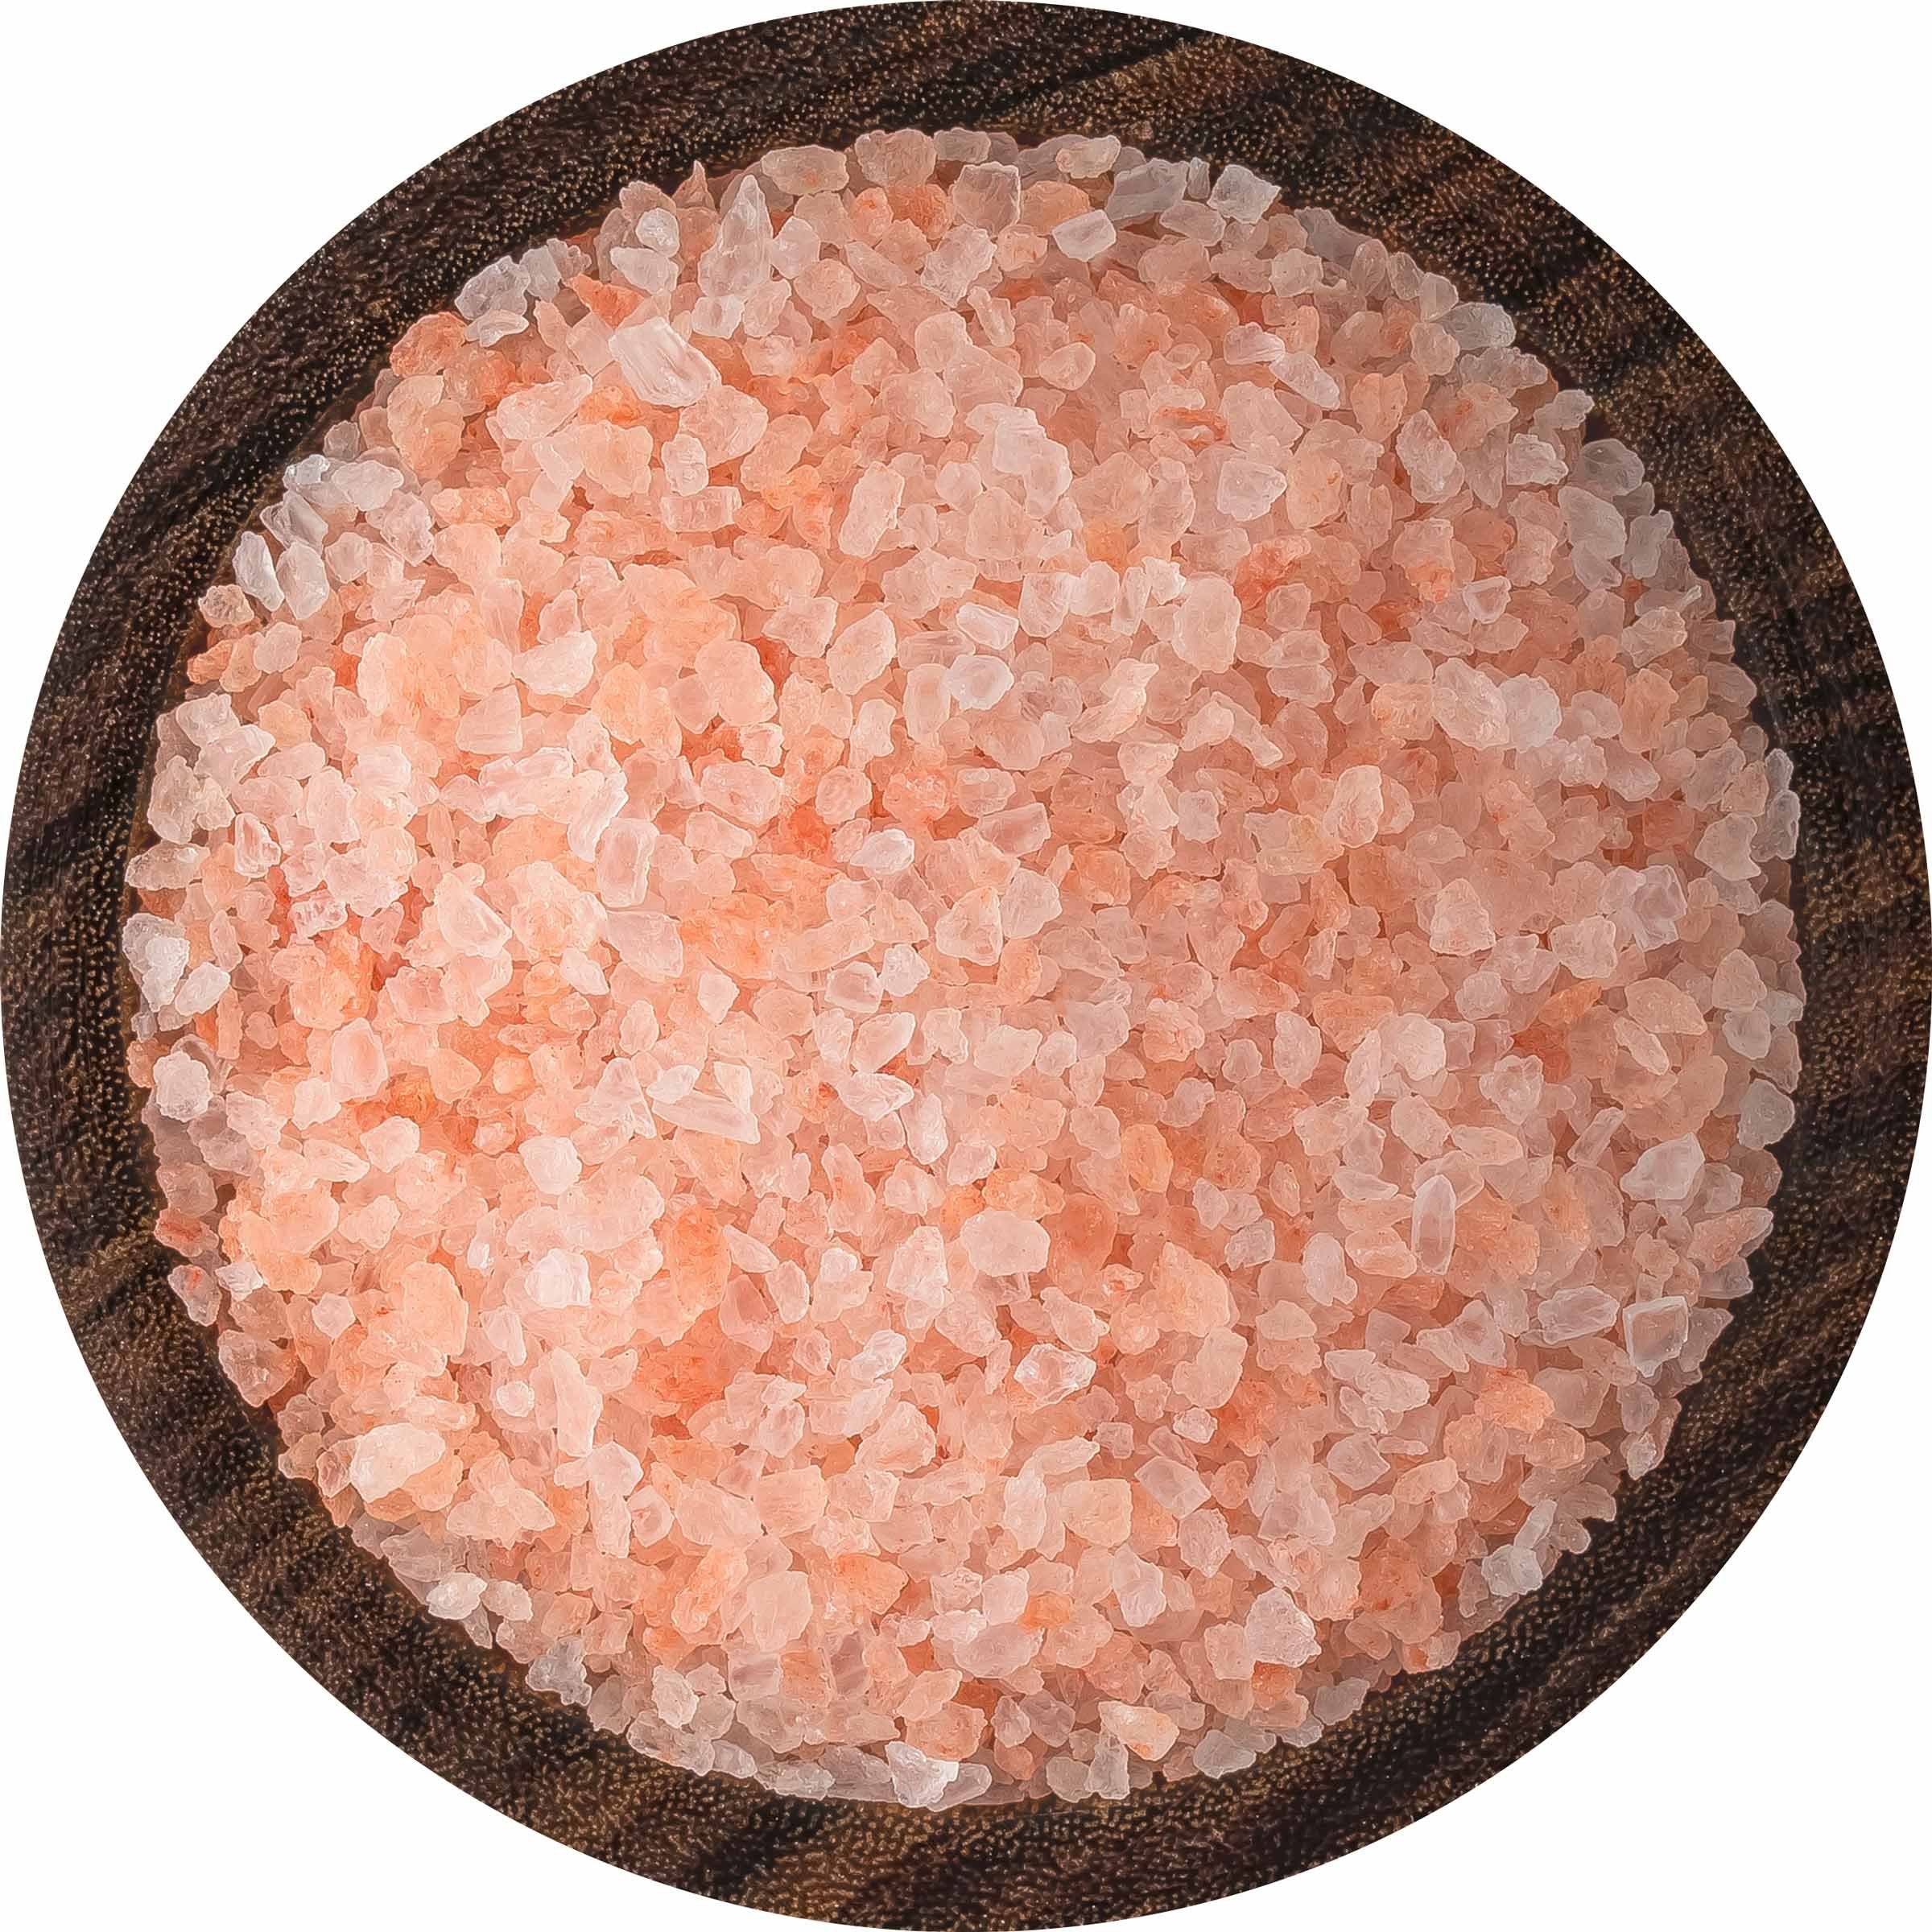 DC Preferred Brand Himalayan Pink Salt, 500 g Jar